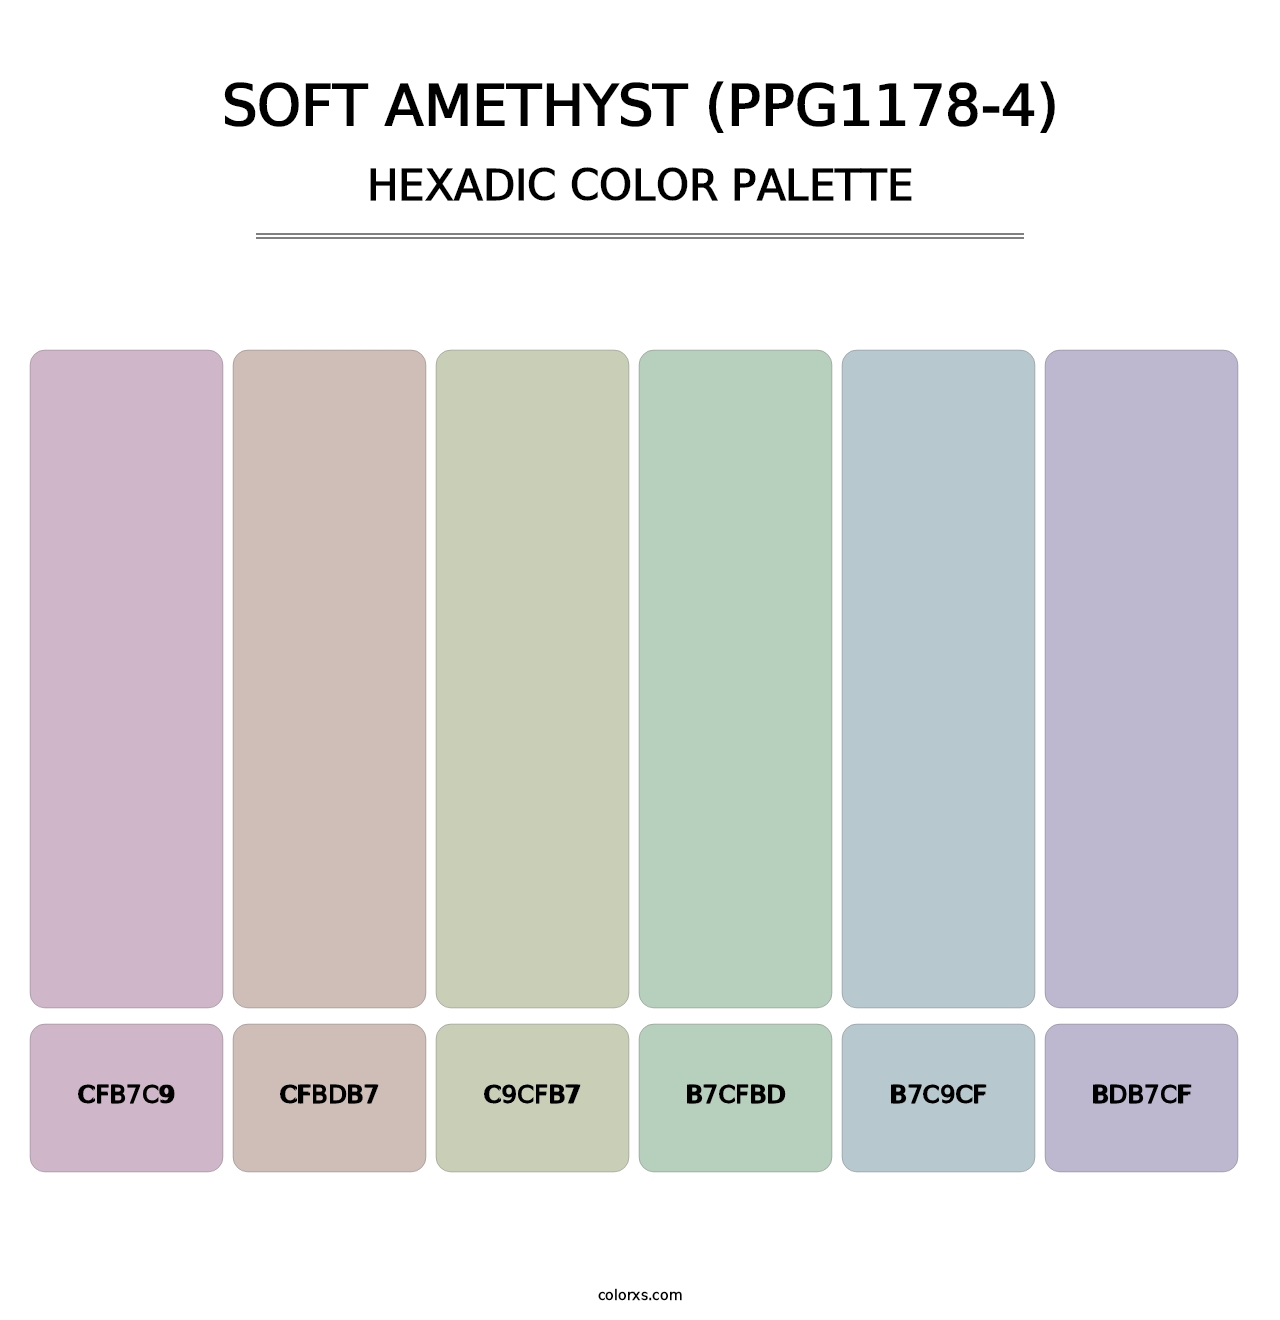 Soft Amethyst (PPG1178-4) - Hexadic Color Palette